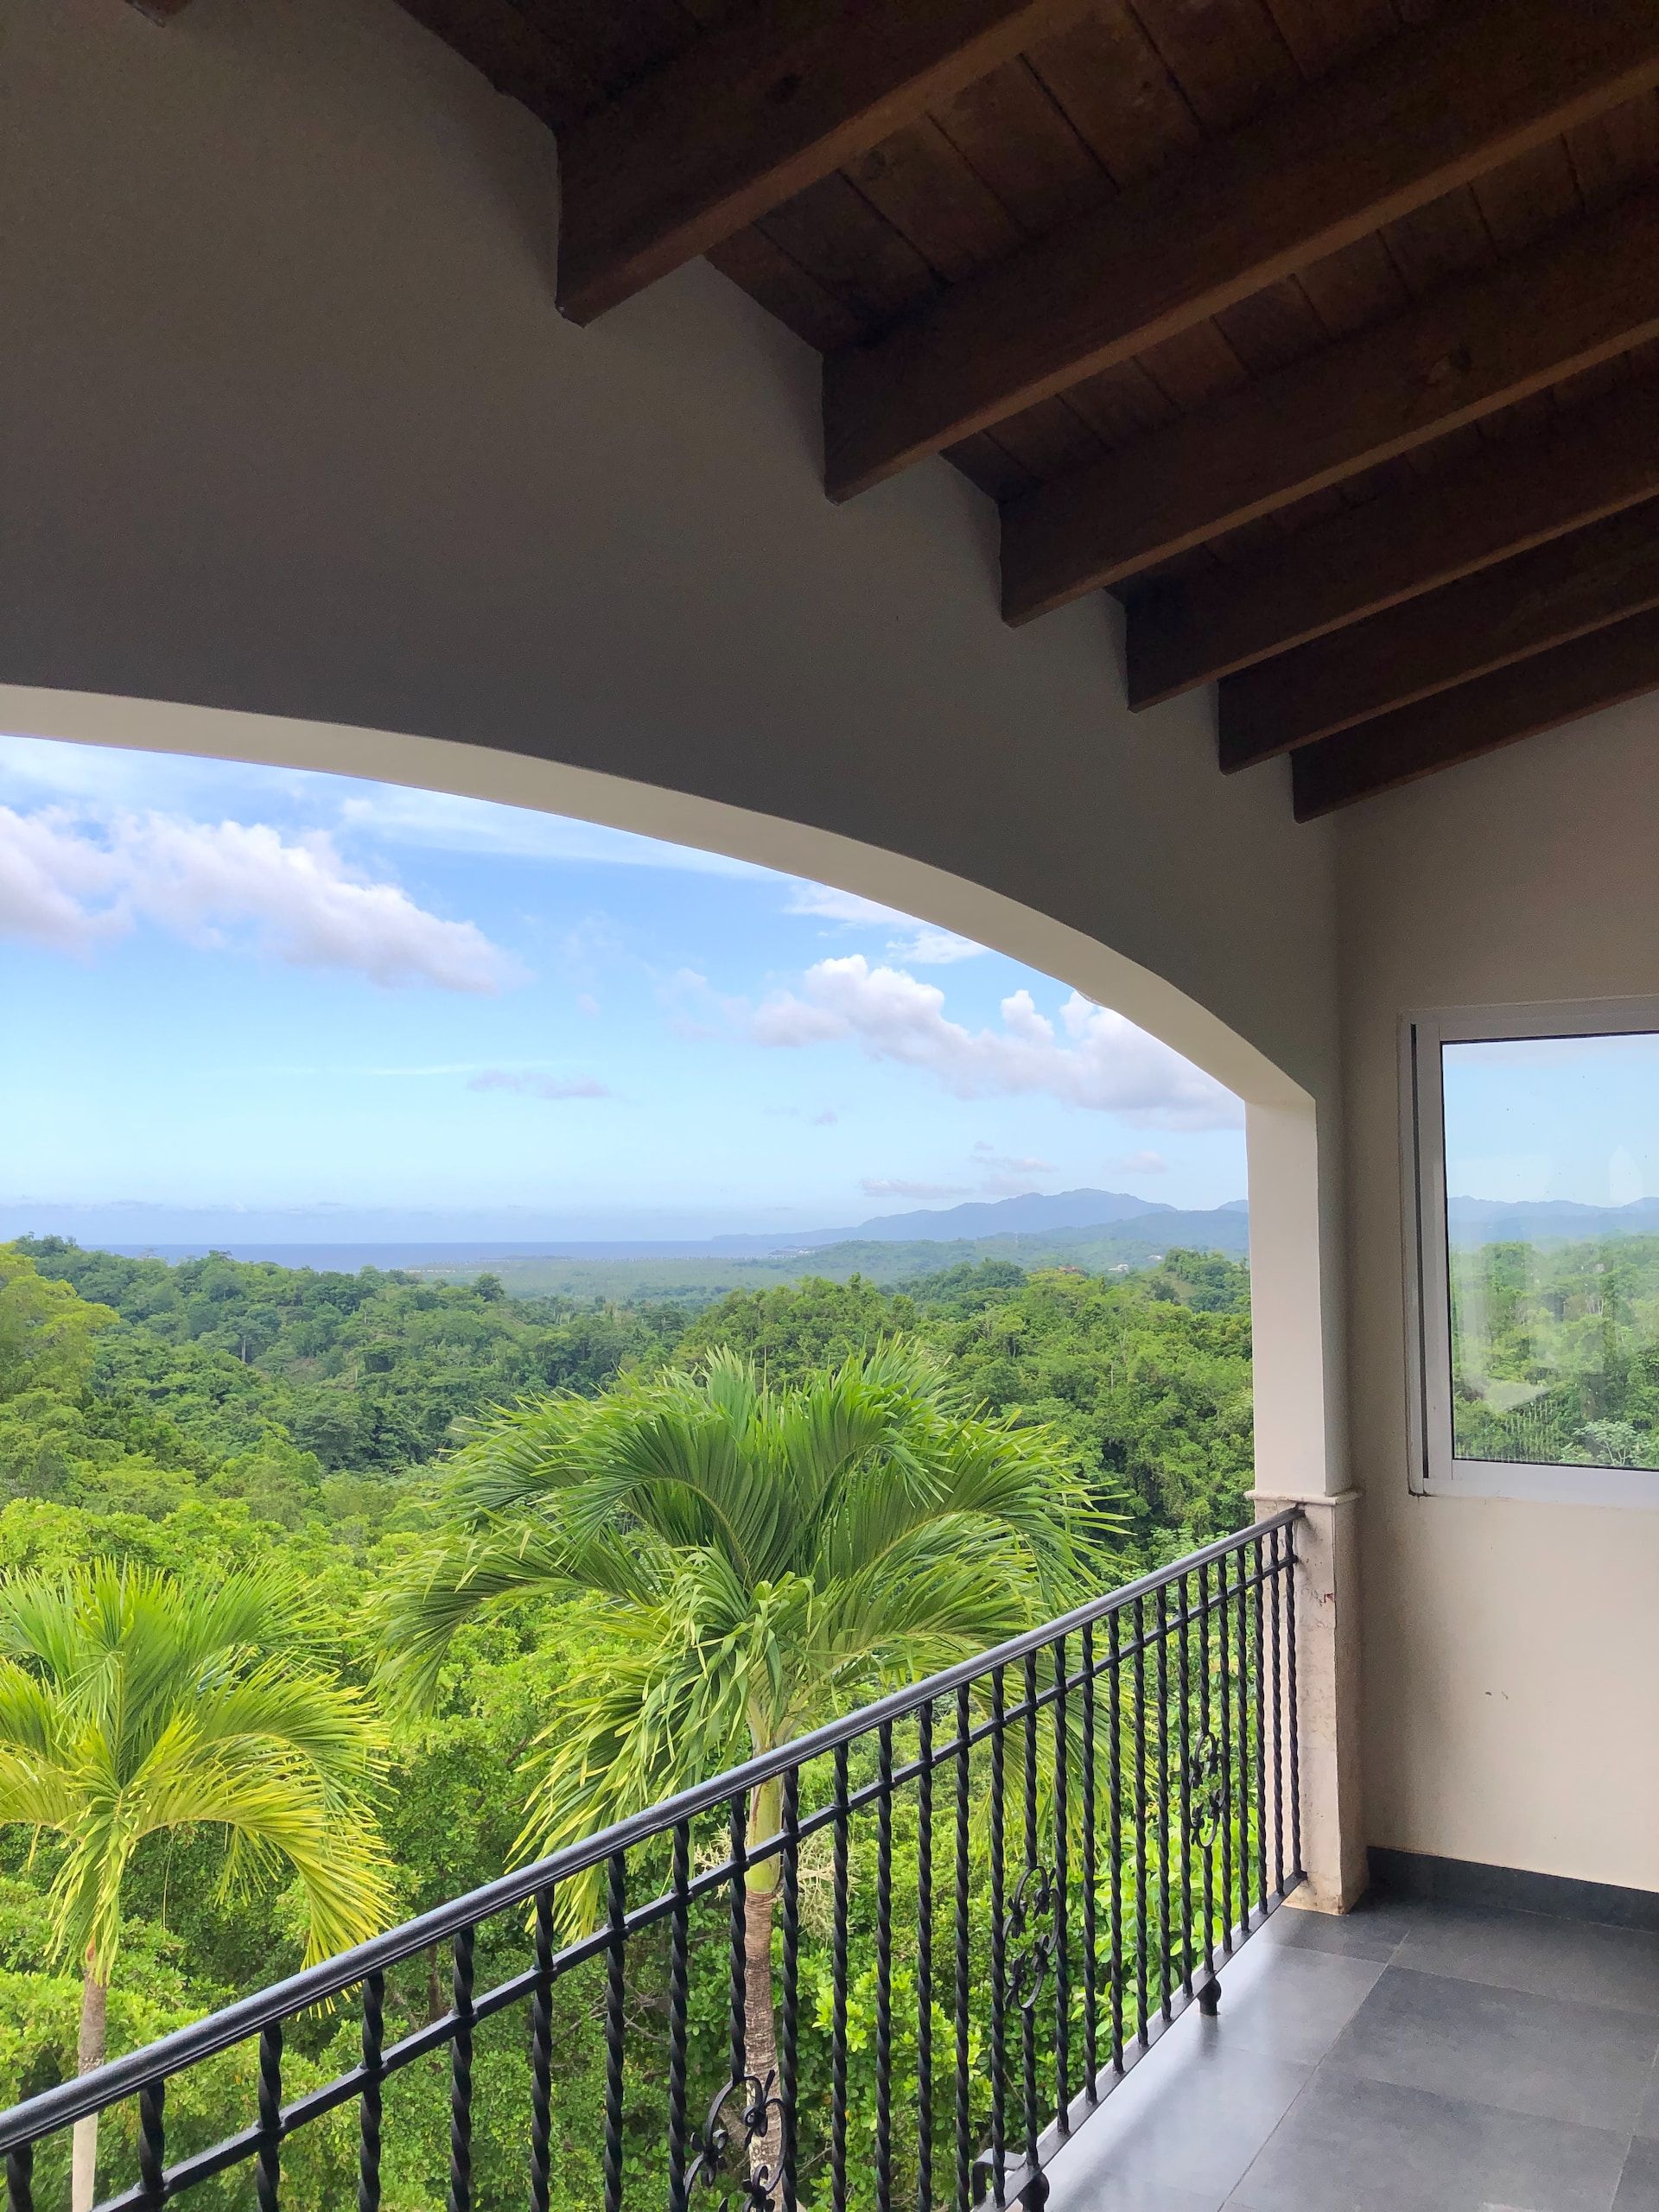 View from a balcony in Las Terrenas, Dominican Republic